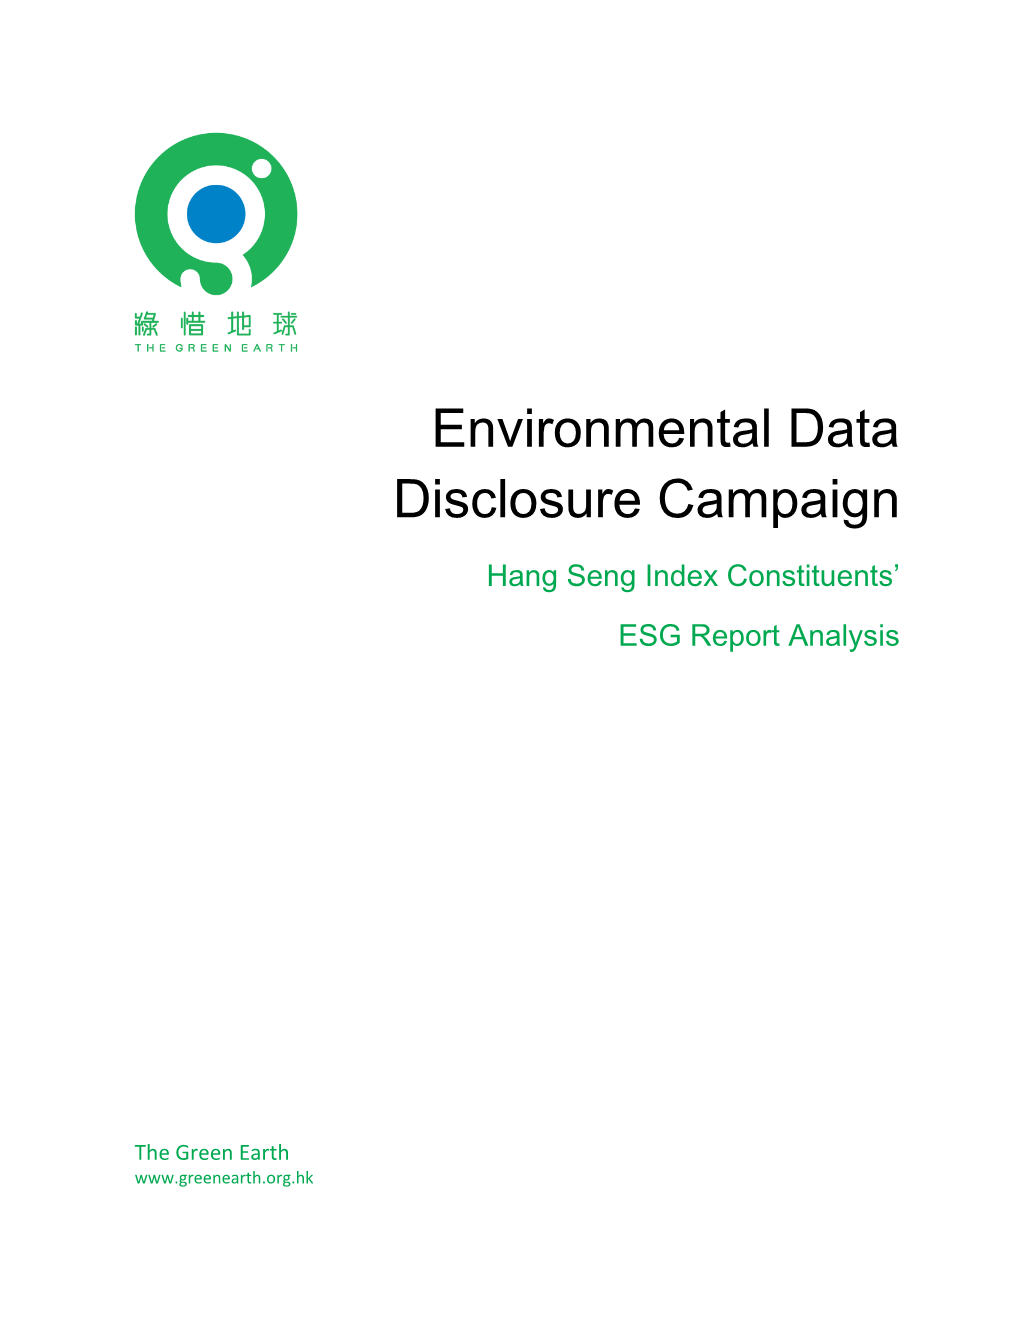 Hang Seng Index Constituents' ESG Report Analysis